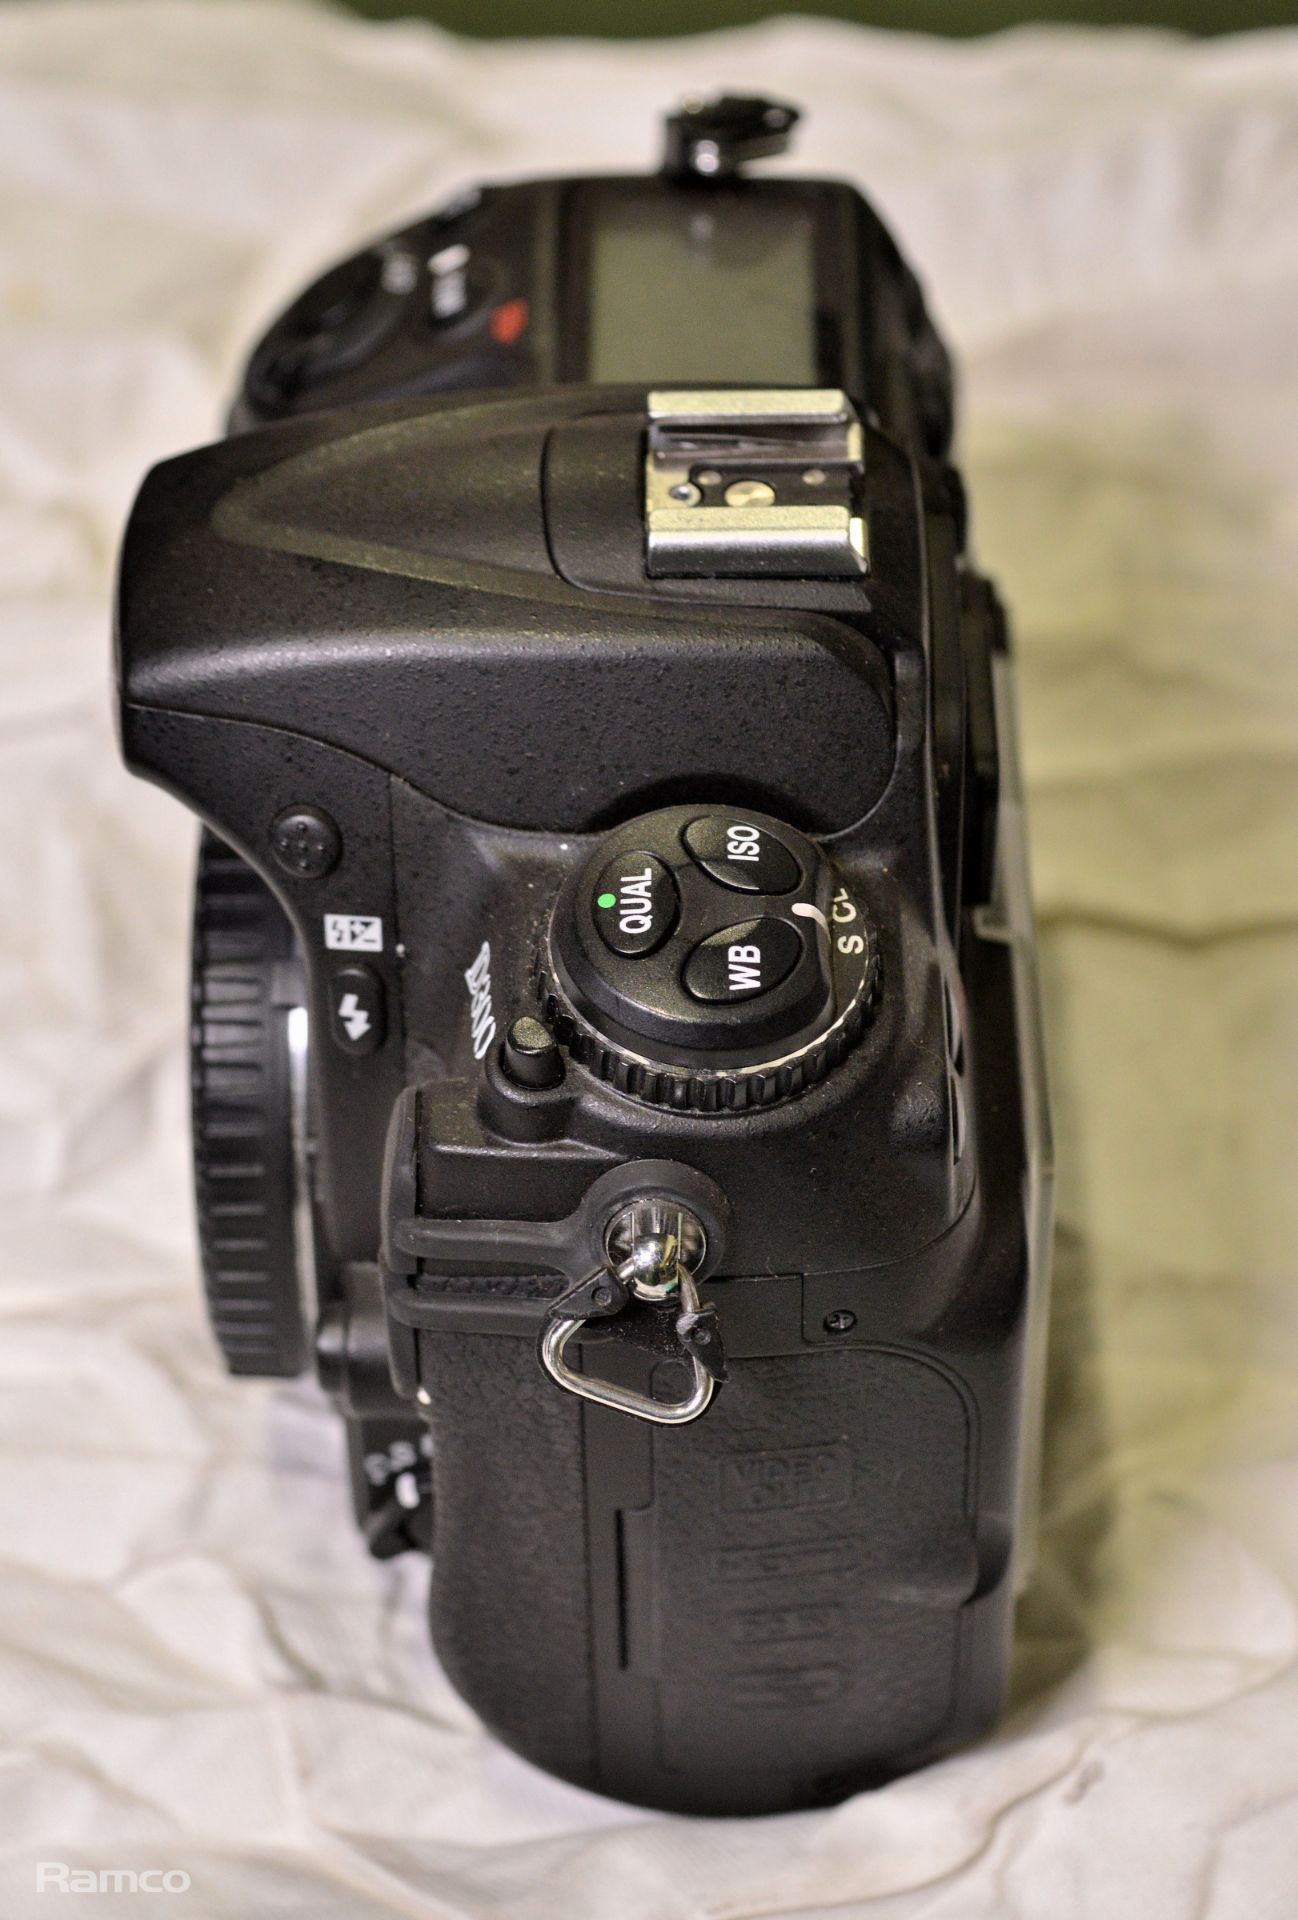 Nikon D300 SLR Digital Camera Body - Image 5 of 7